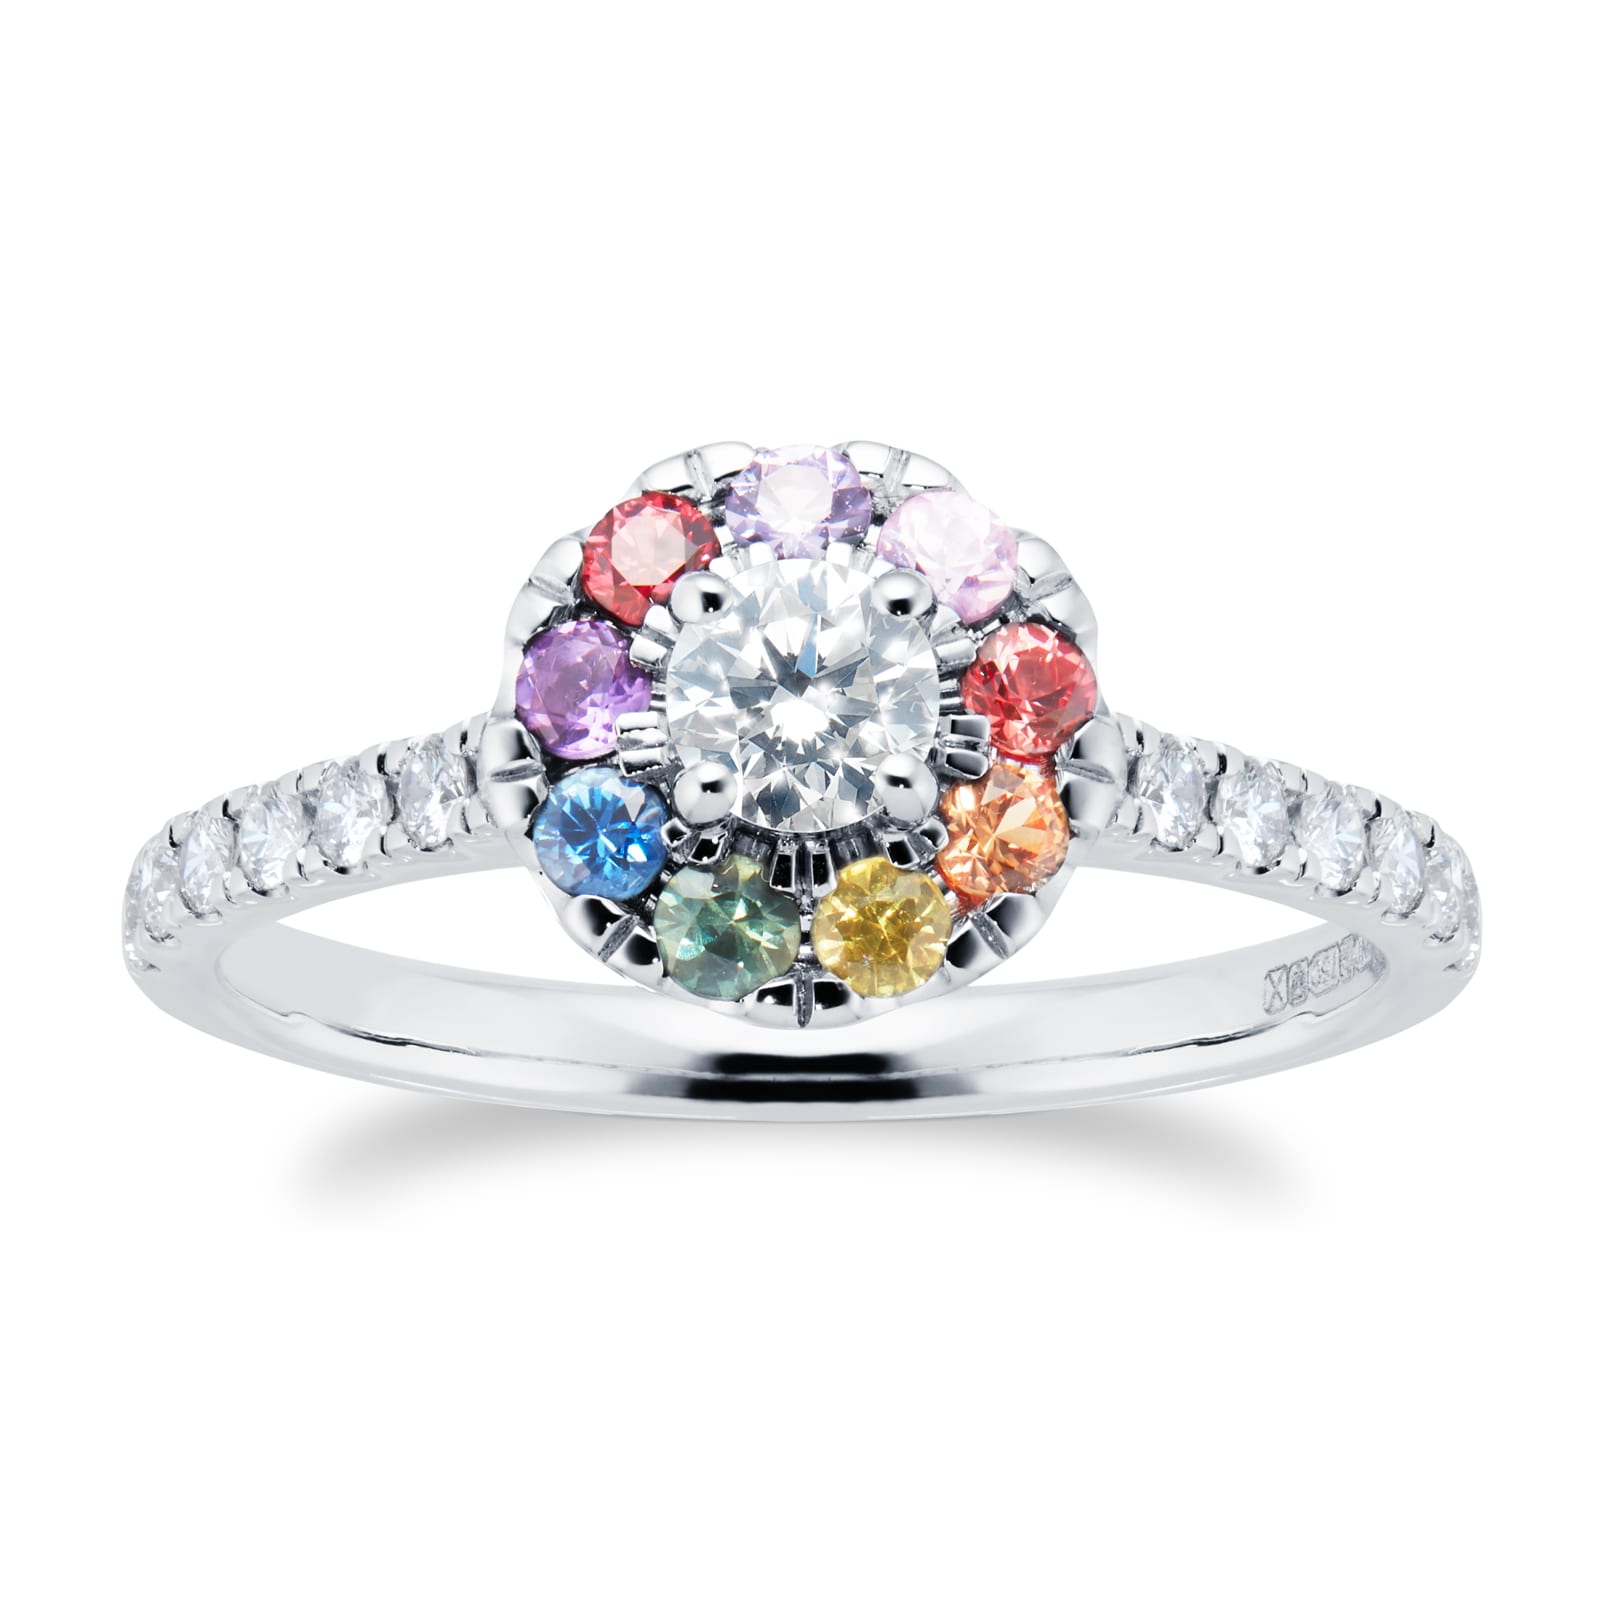 18ct White Gold Diamond & Rainbow Sapphire Halo Ring - Ring Size K.5